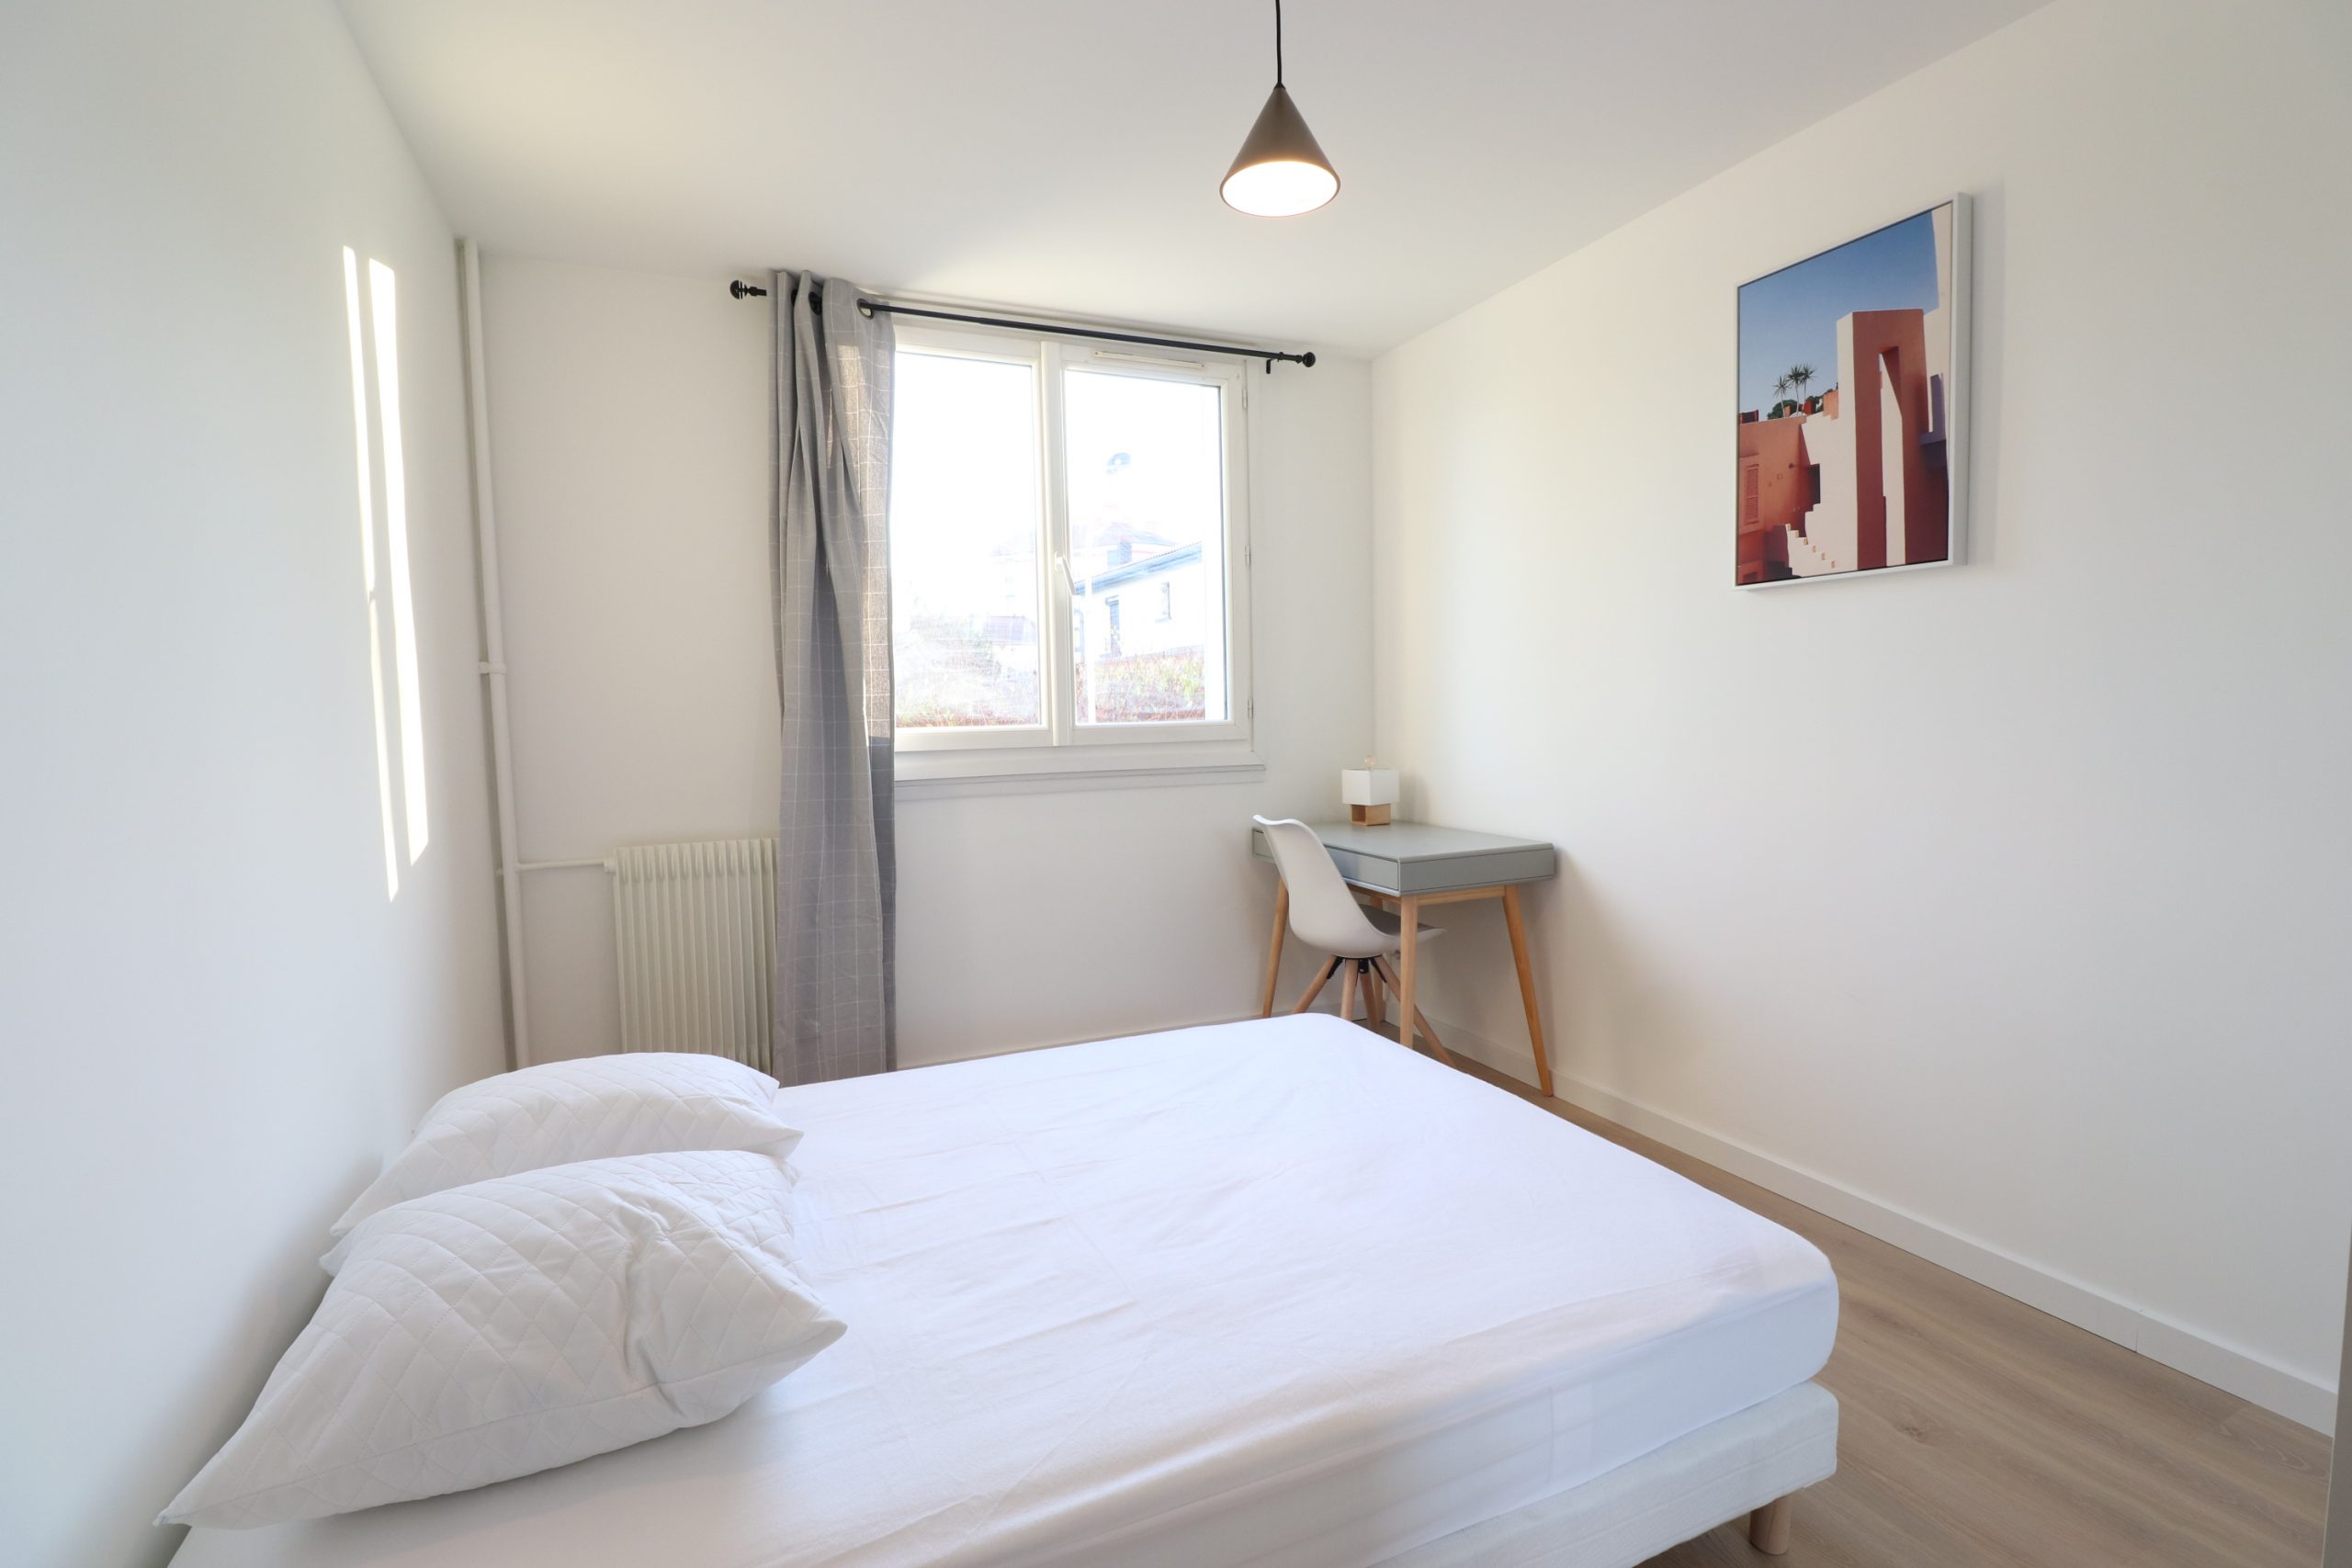 Location appartement Villeurbanne - Chambre 3